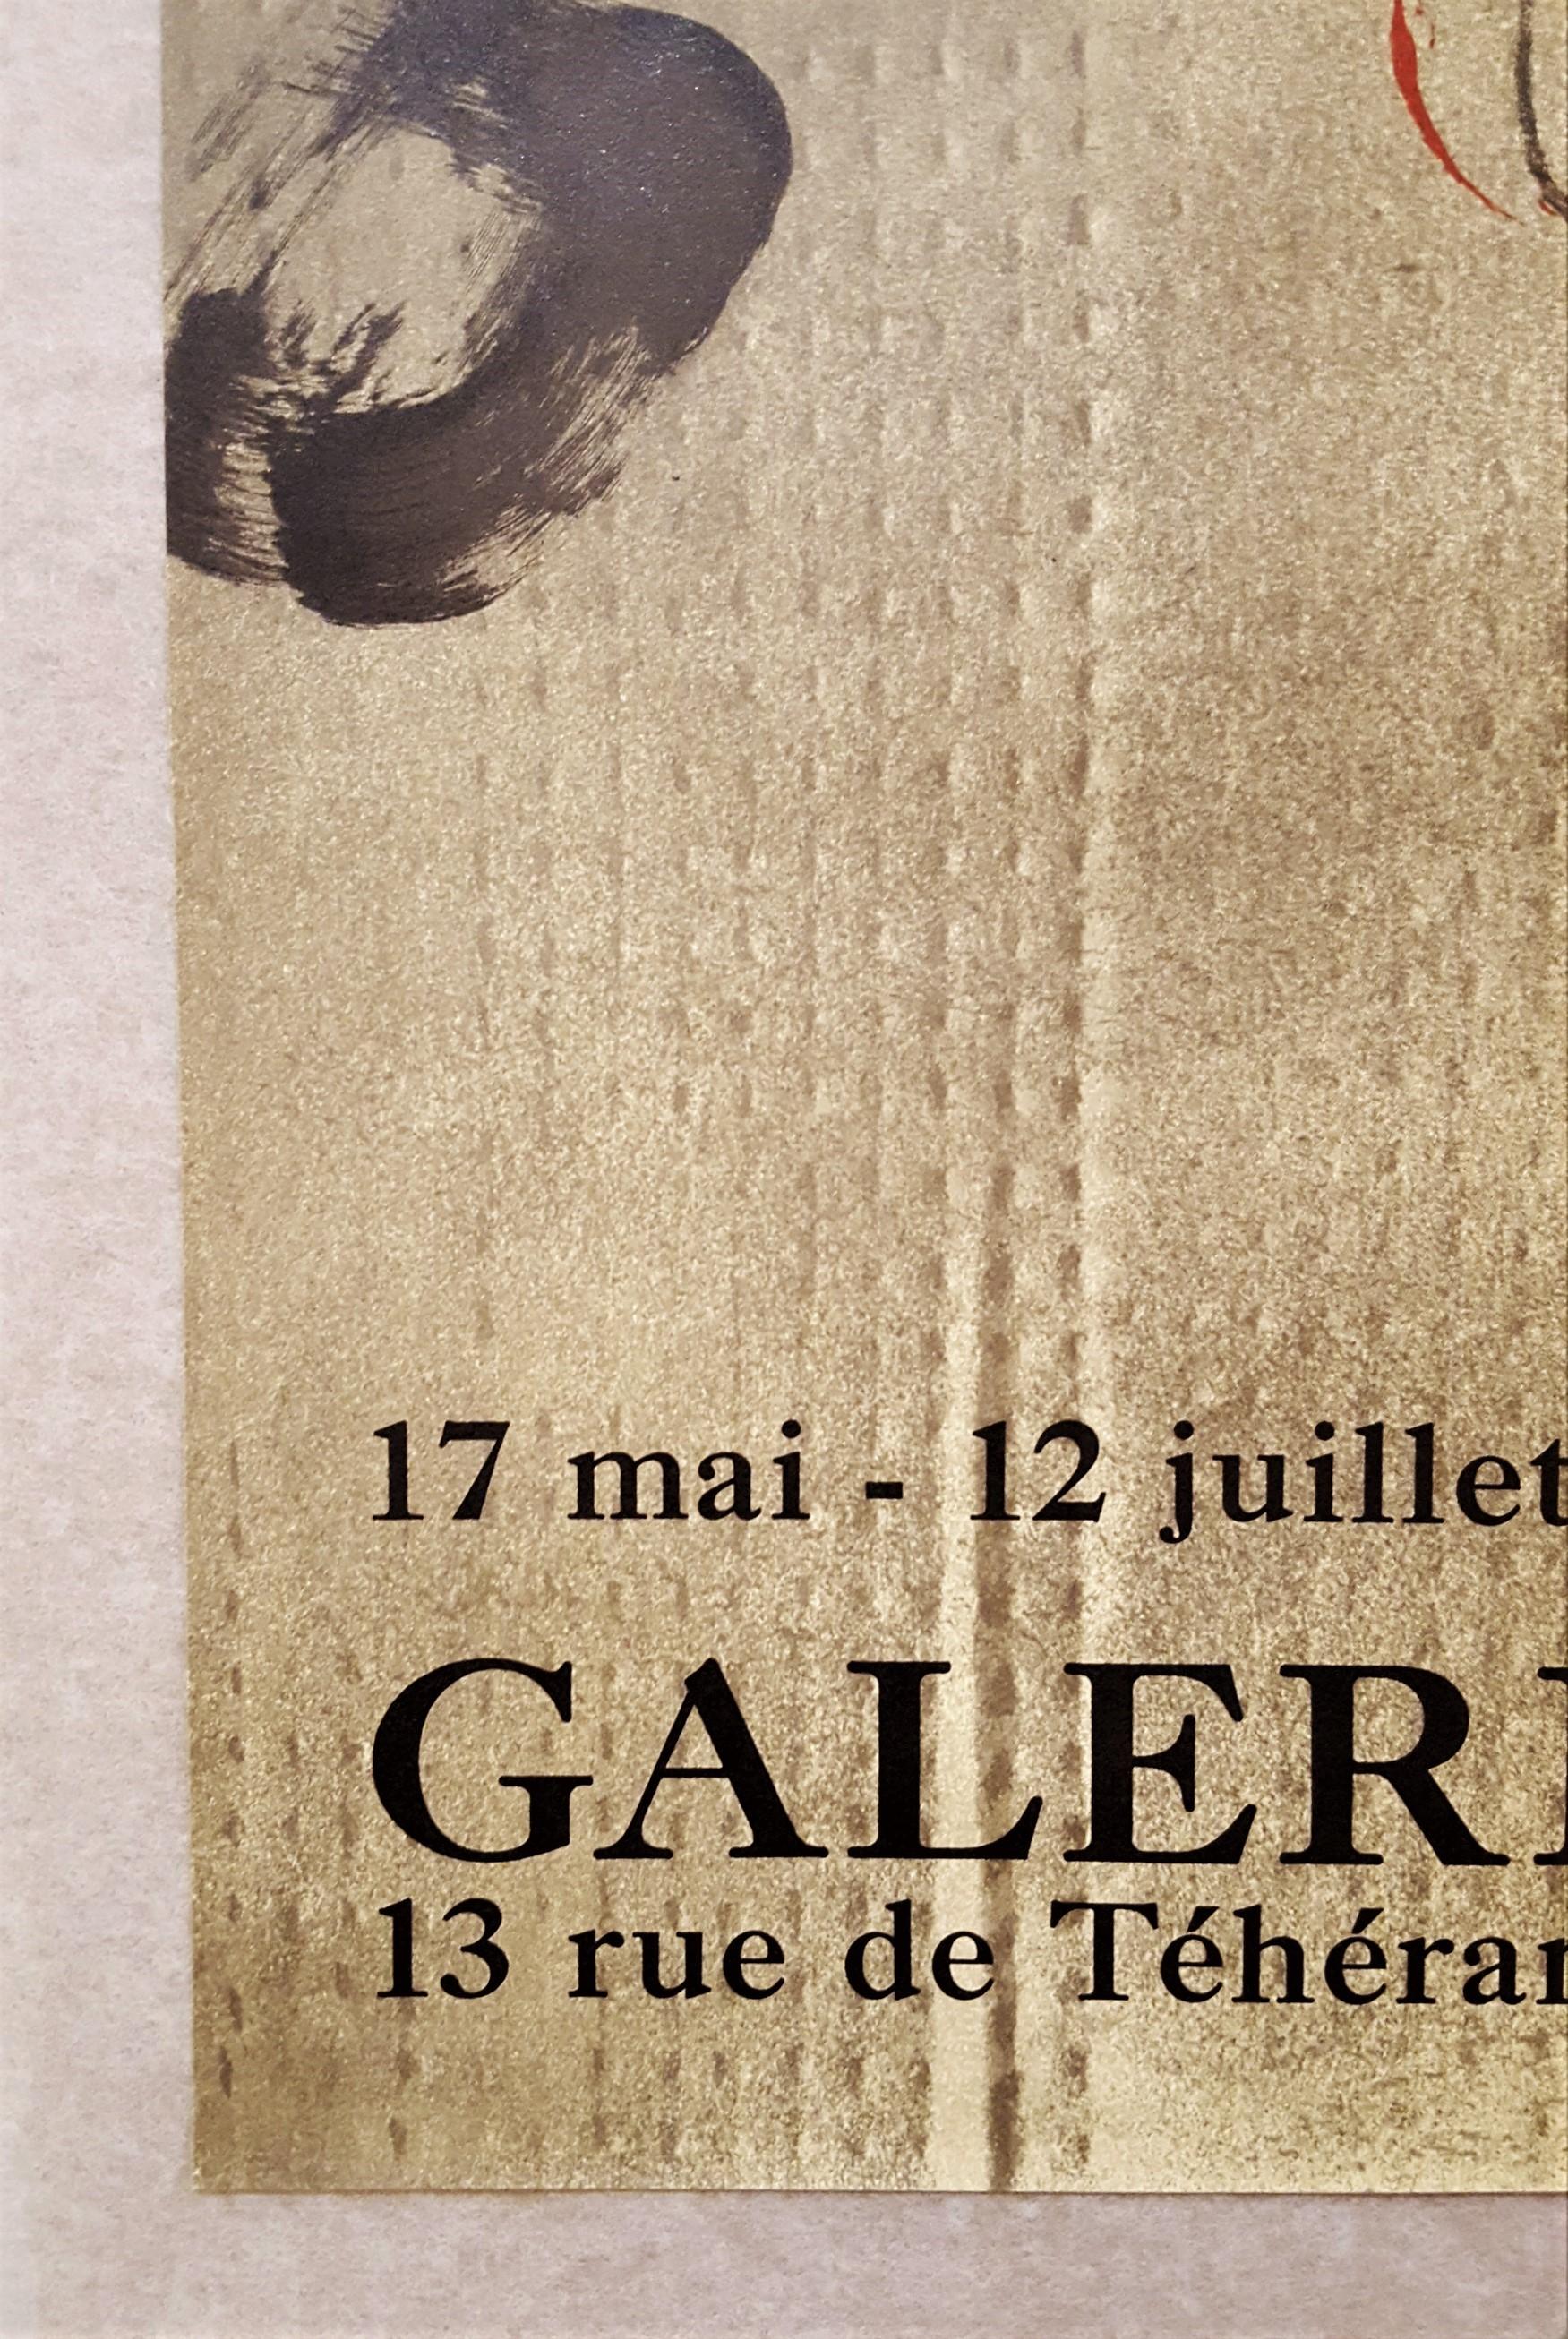 Galerie Maeght - Print by Antoni Tàpies